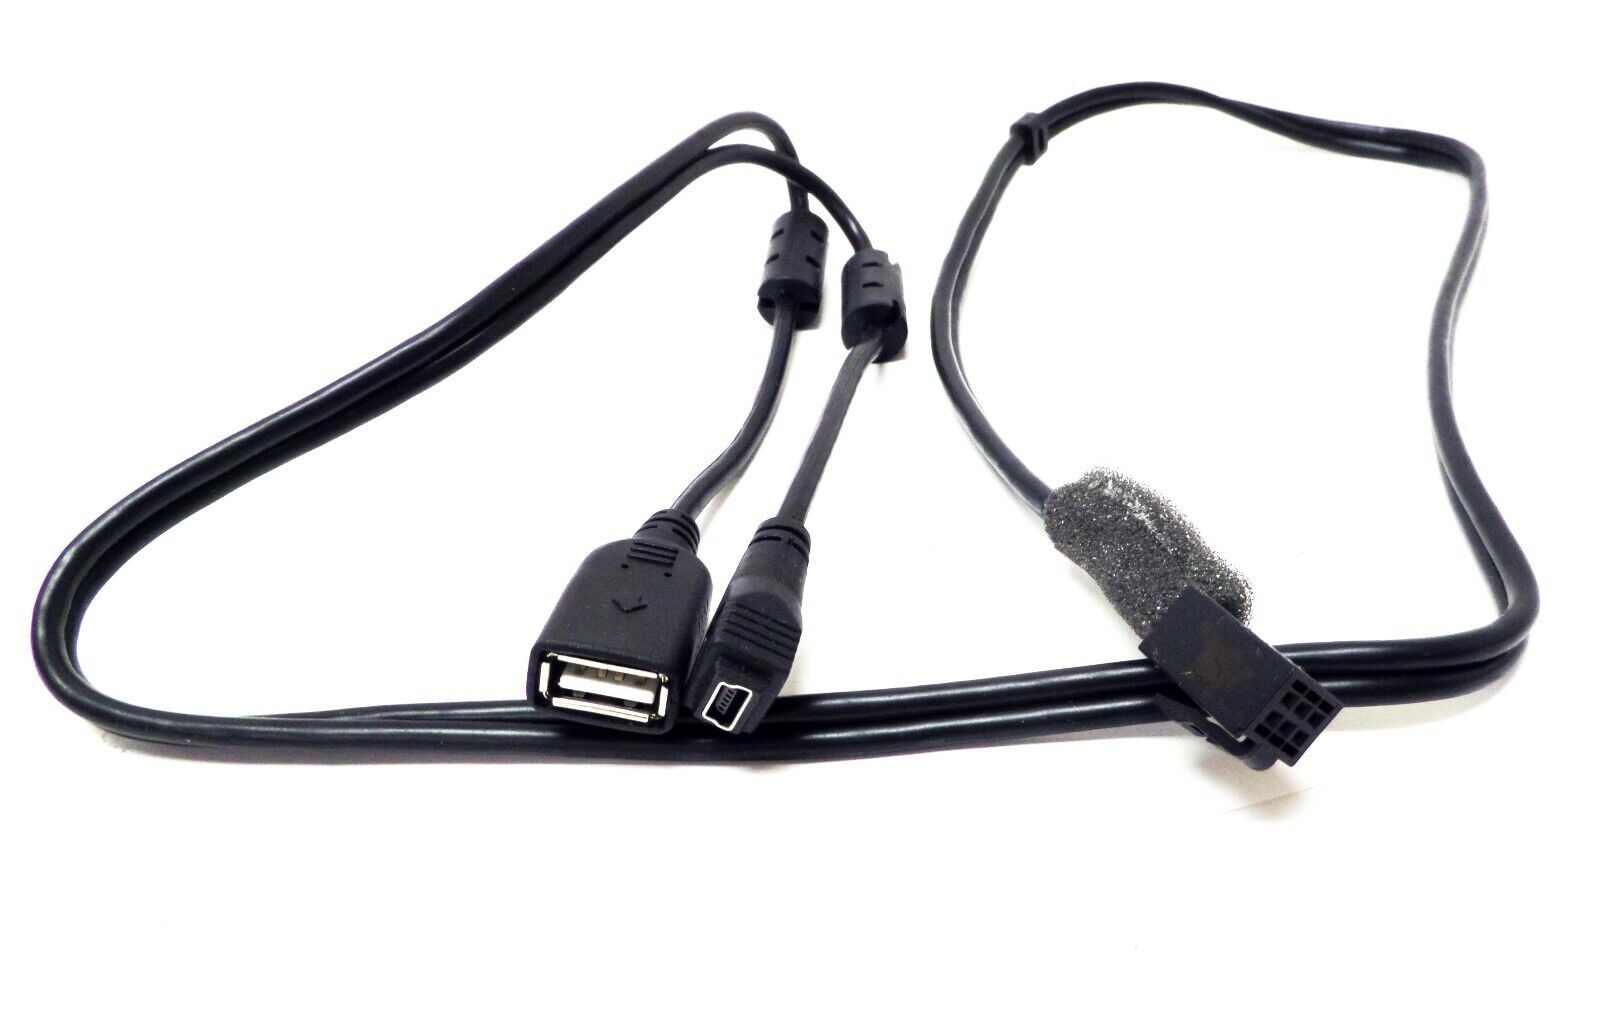 Mini USB Cable Male, Female USB Sync Charging Data Cable 40